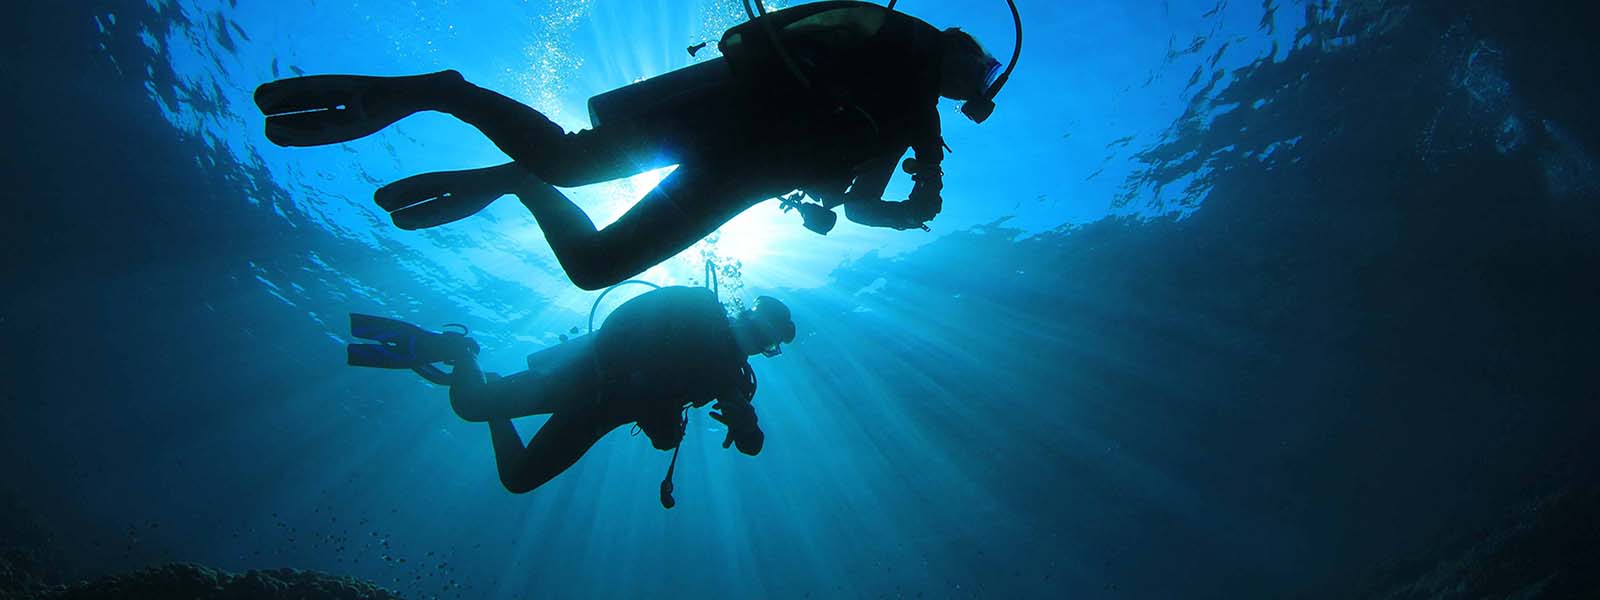 Best Florida Getaways For Diving And Snorkeling